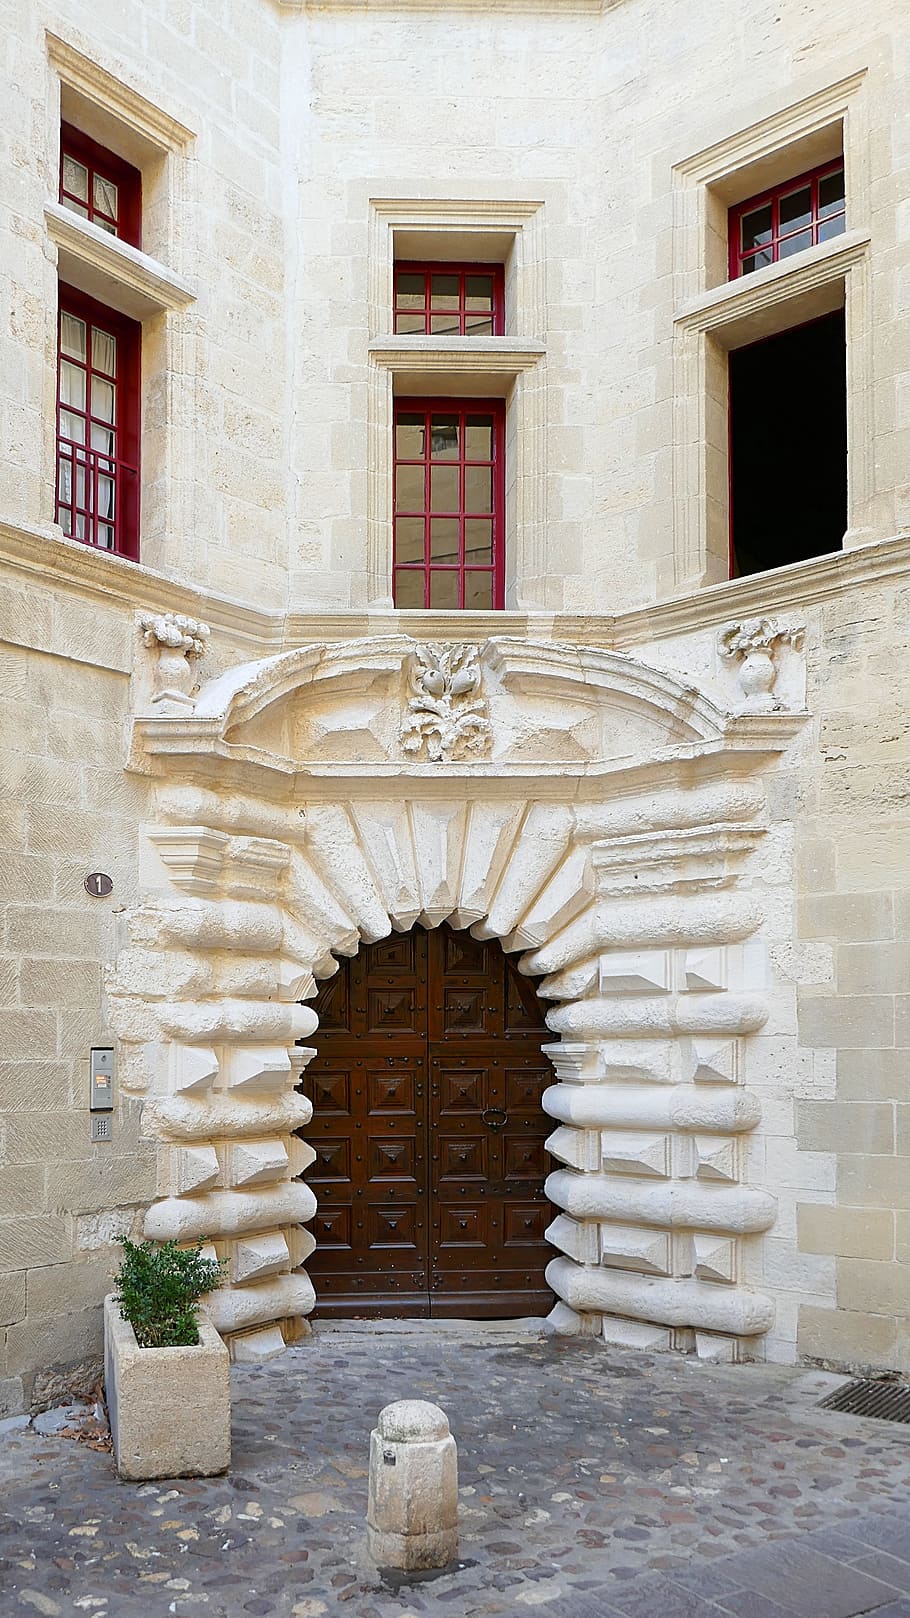 Puerta, Uzès, Saint Etienne, Gard, 1 rue Saint Etienne, Francia, medieval, louis xiii, madera, arquitectura